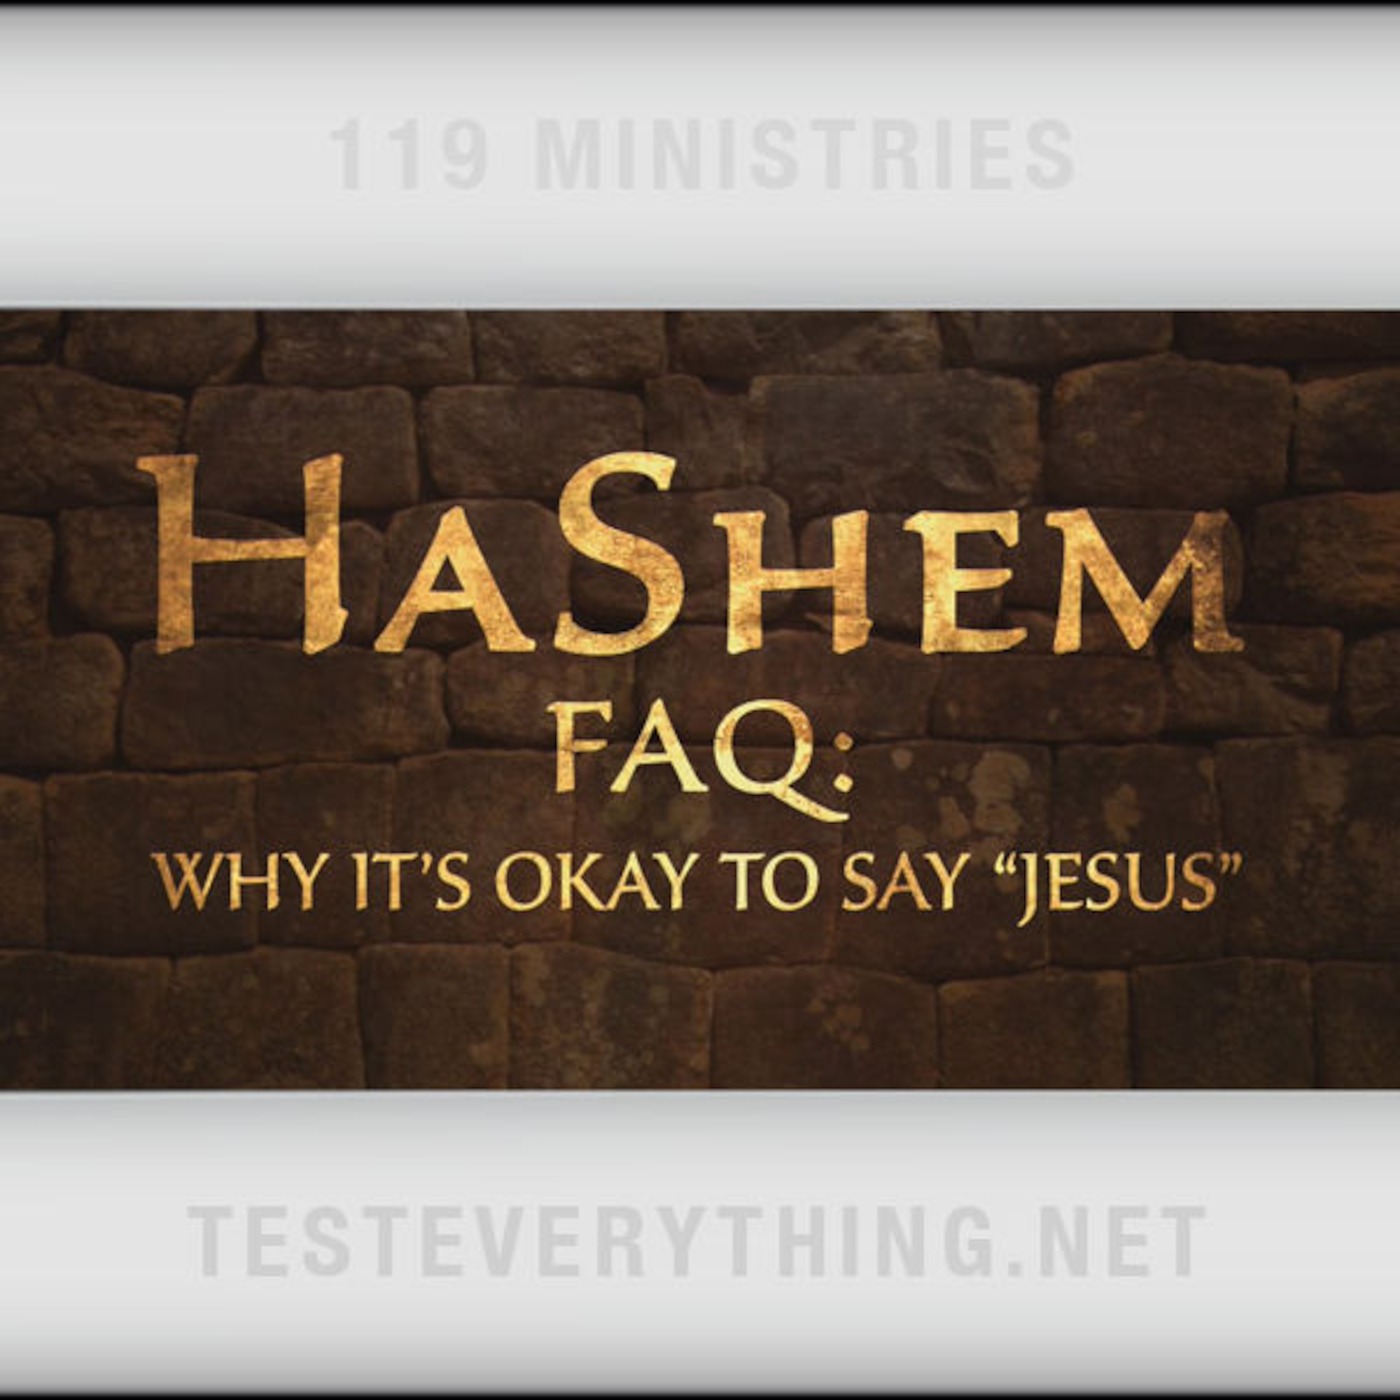 HaShem FAQ: Why It's Okay to Say 